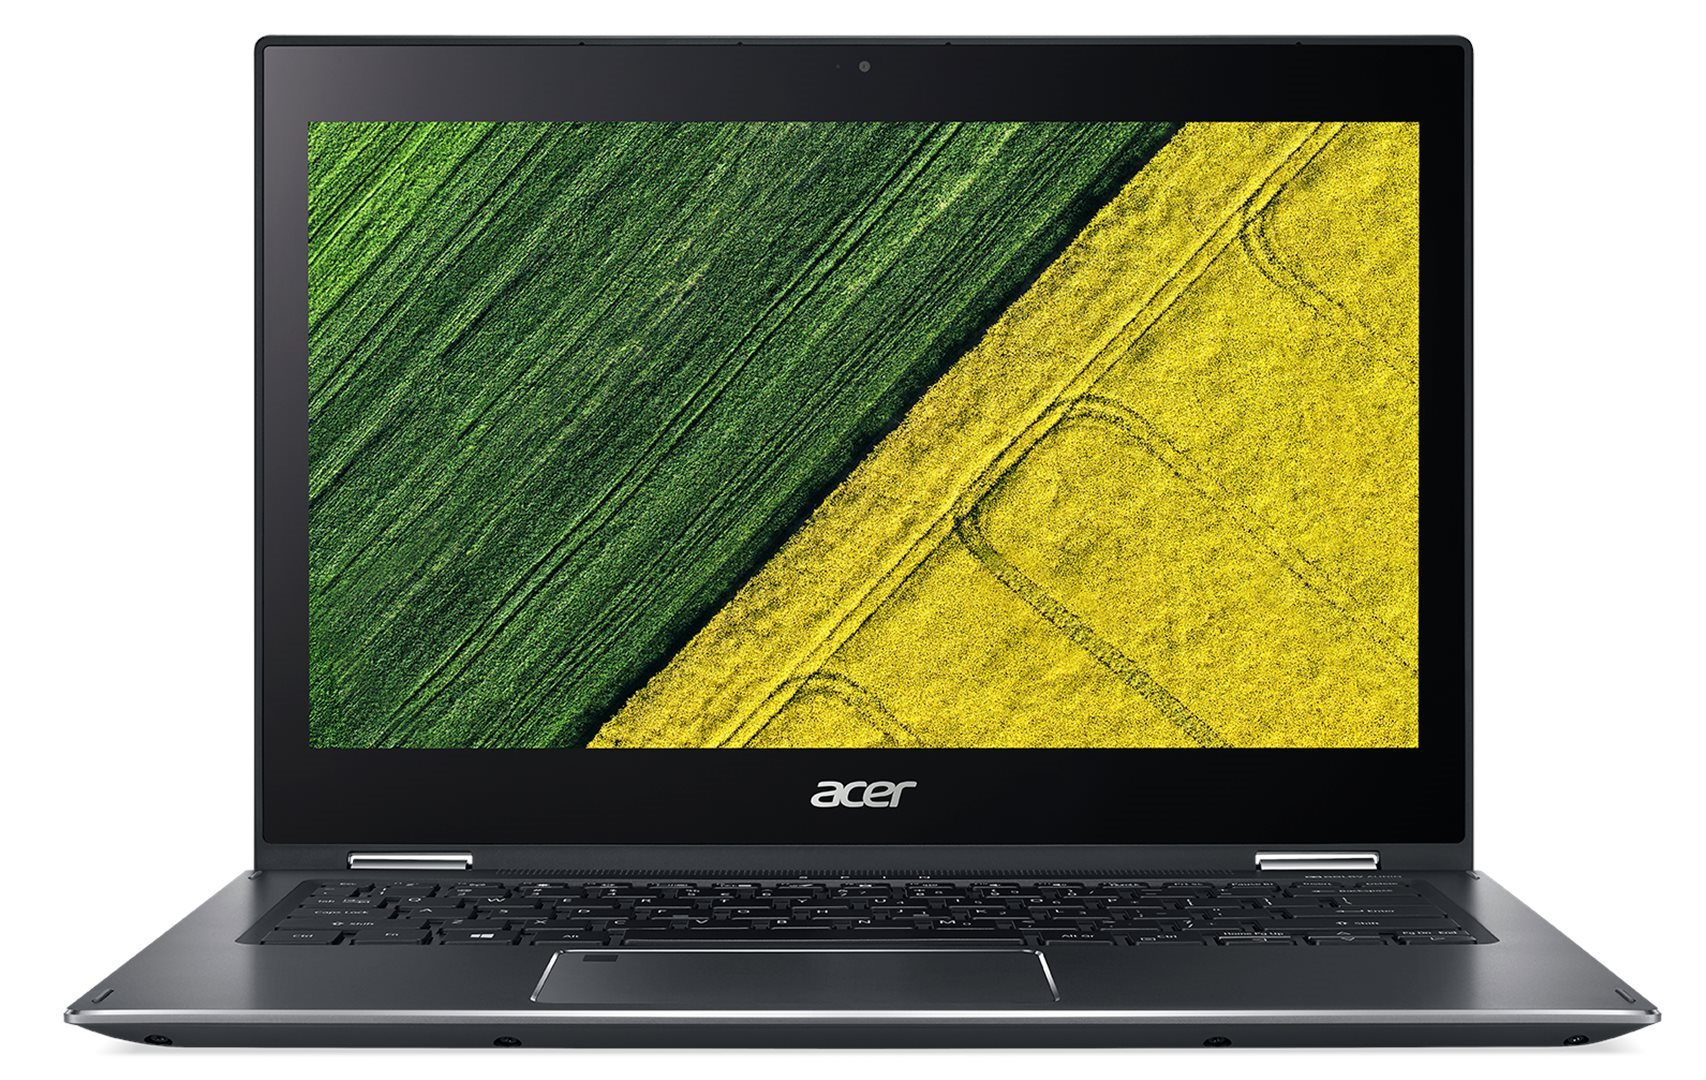 Acer Spin 5 Pro (SP513-53N-54CT) i5-8265U/8GB+N/A/256GB SSD+N/A/HD Graphics/13.3" Multi-touch FHD IPS/BT/W10 Pro/Gray